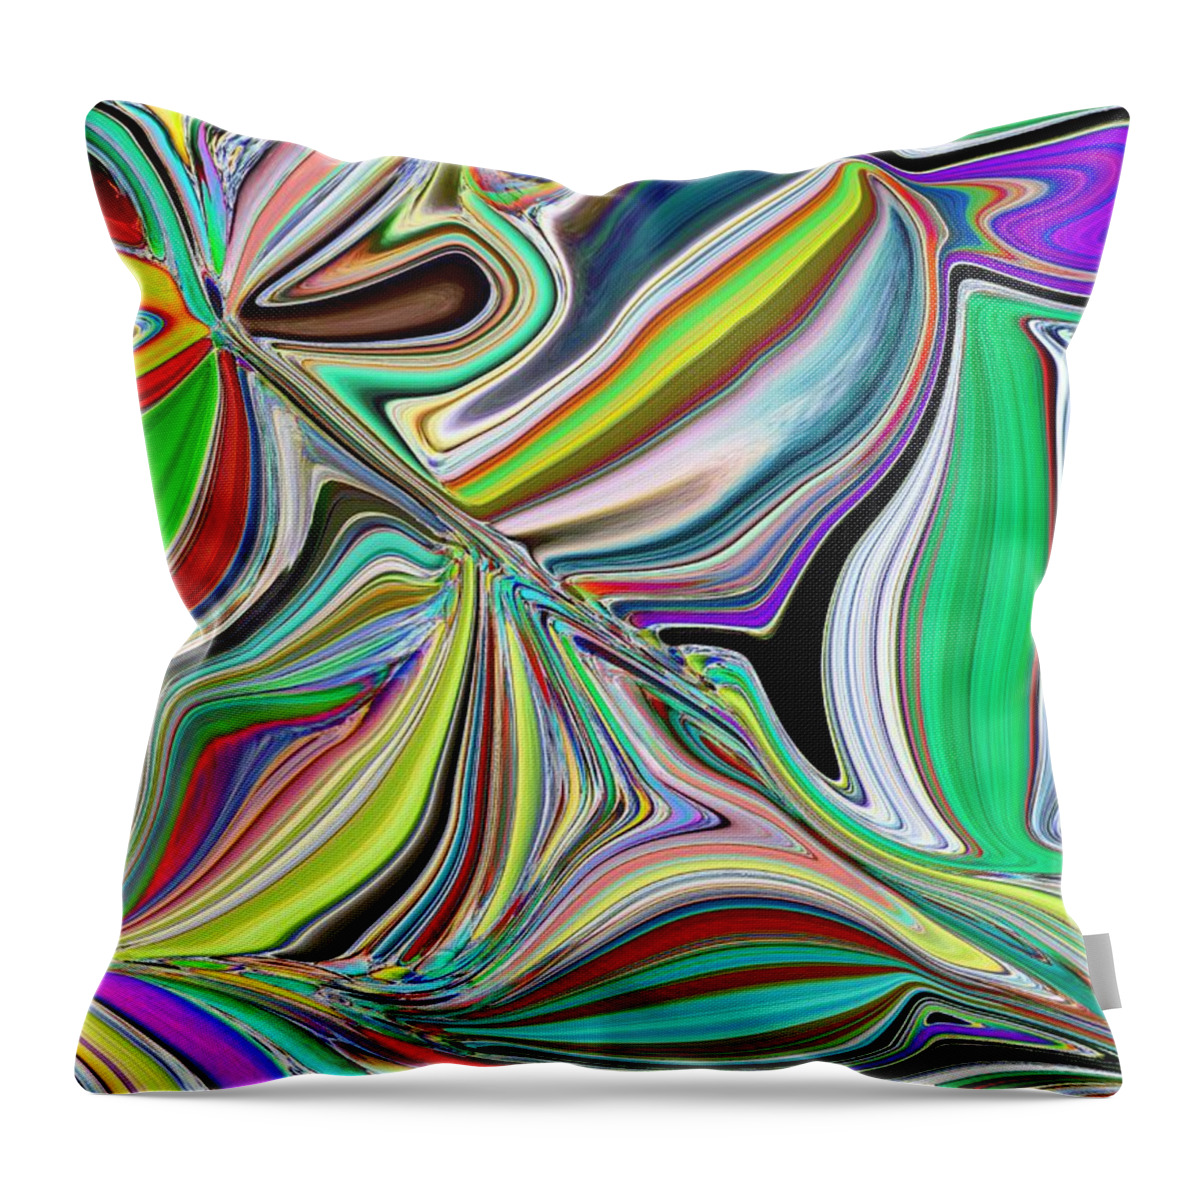 Abstract Throw Pillow featuring the digital art Spring Kaleidoscope by Tim Allen